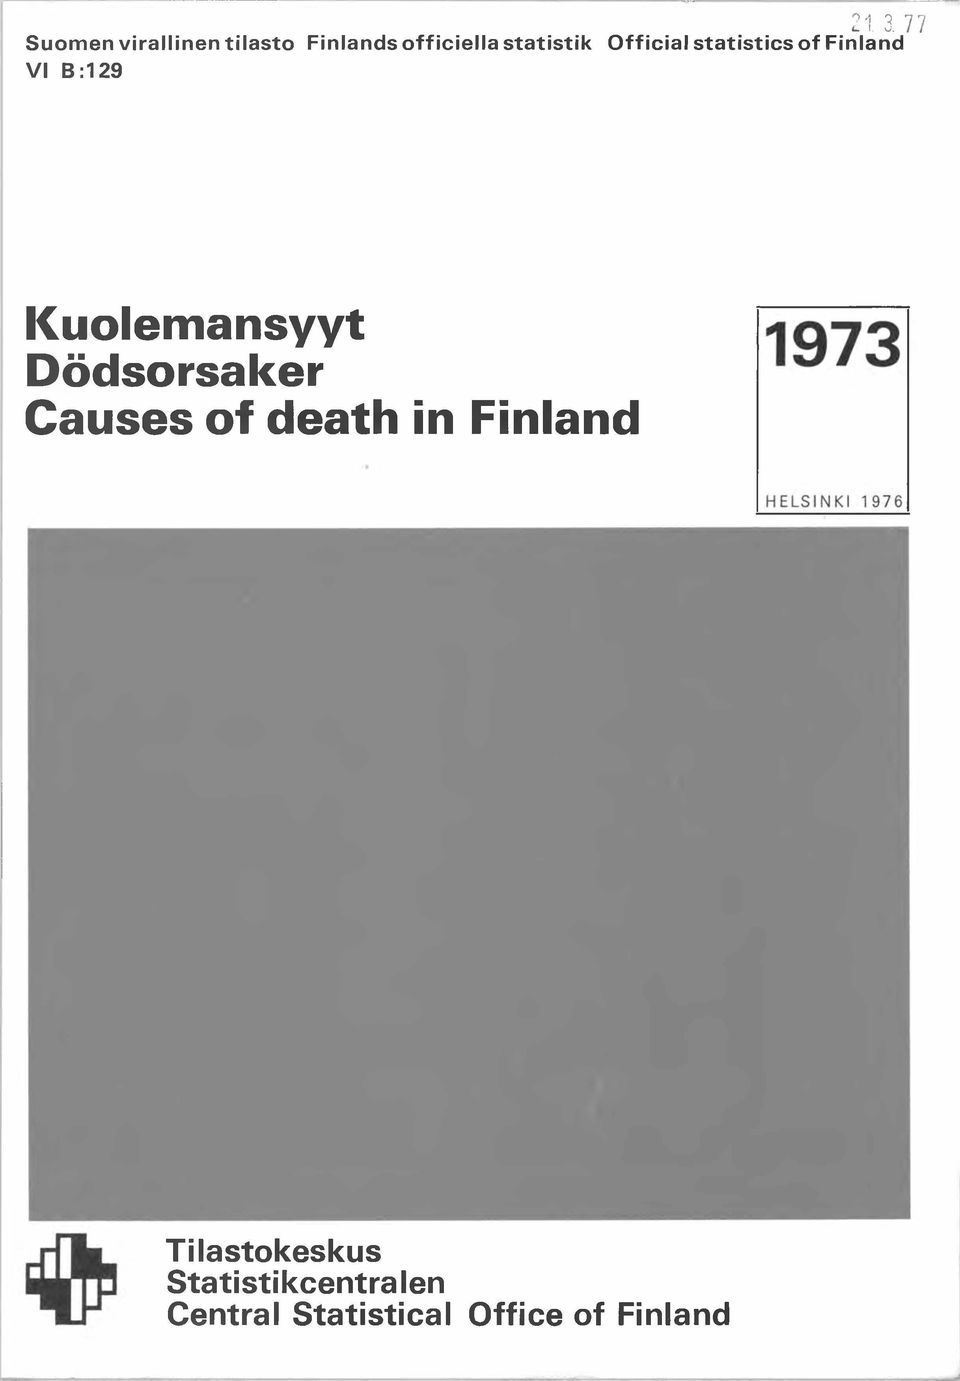 Official statistics of Finland VI B :129 Kuolemansyyt